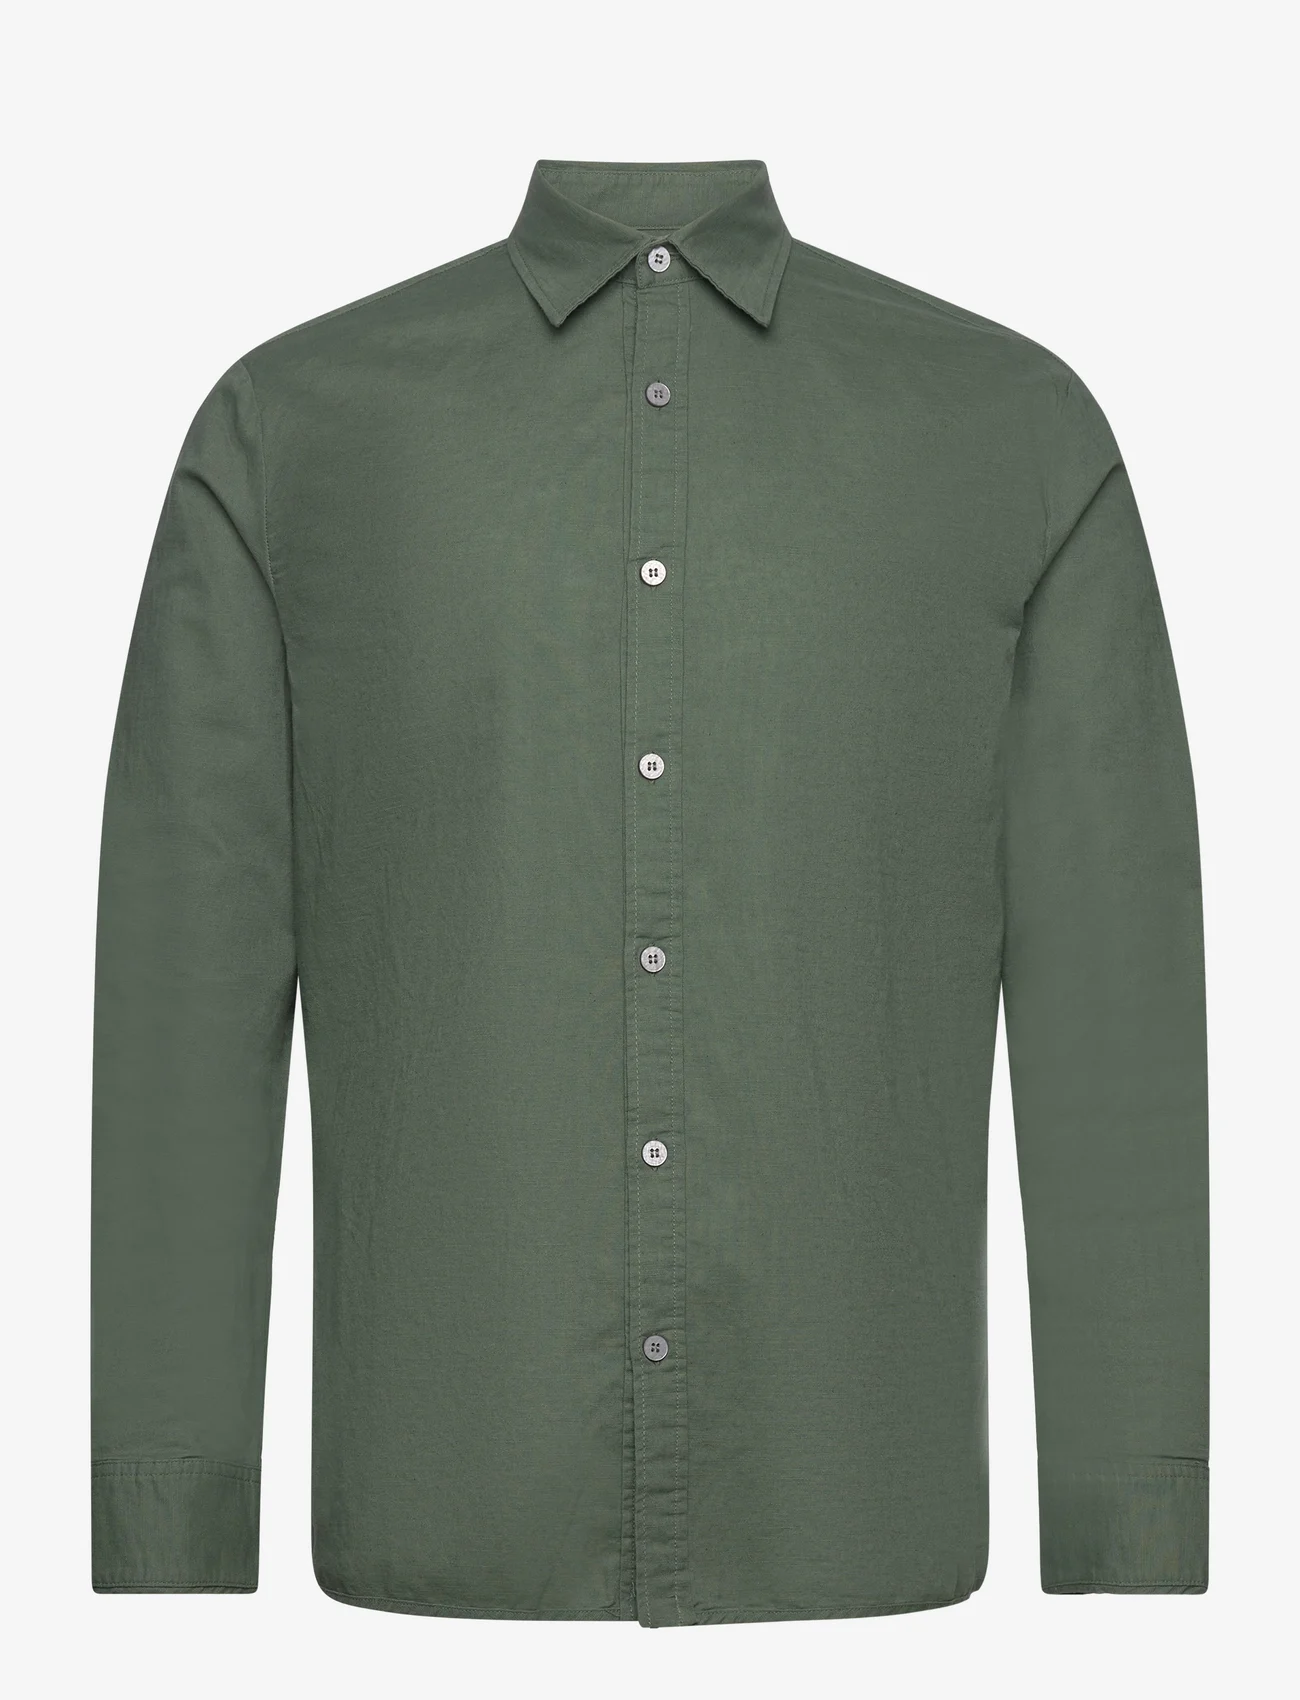 Bruuns Bazaar - LinowBBGiil LS shirt - rennot kauluspaidat - frosty spruce - 0